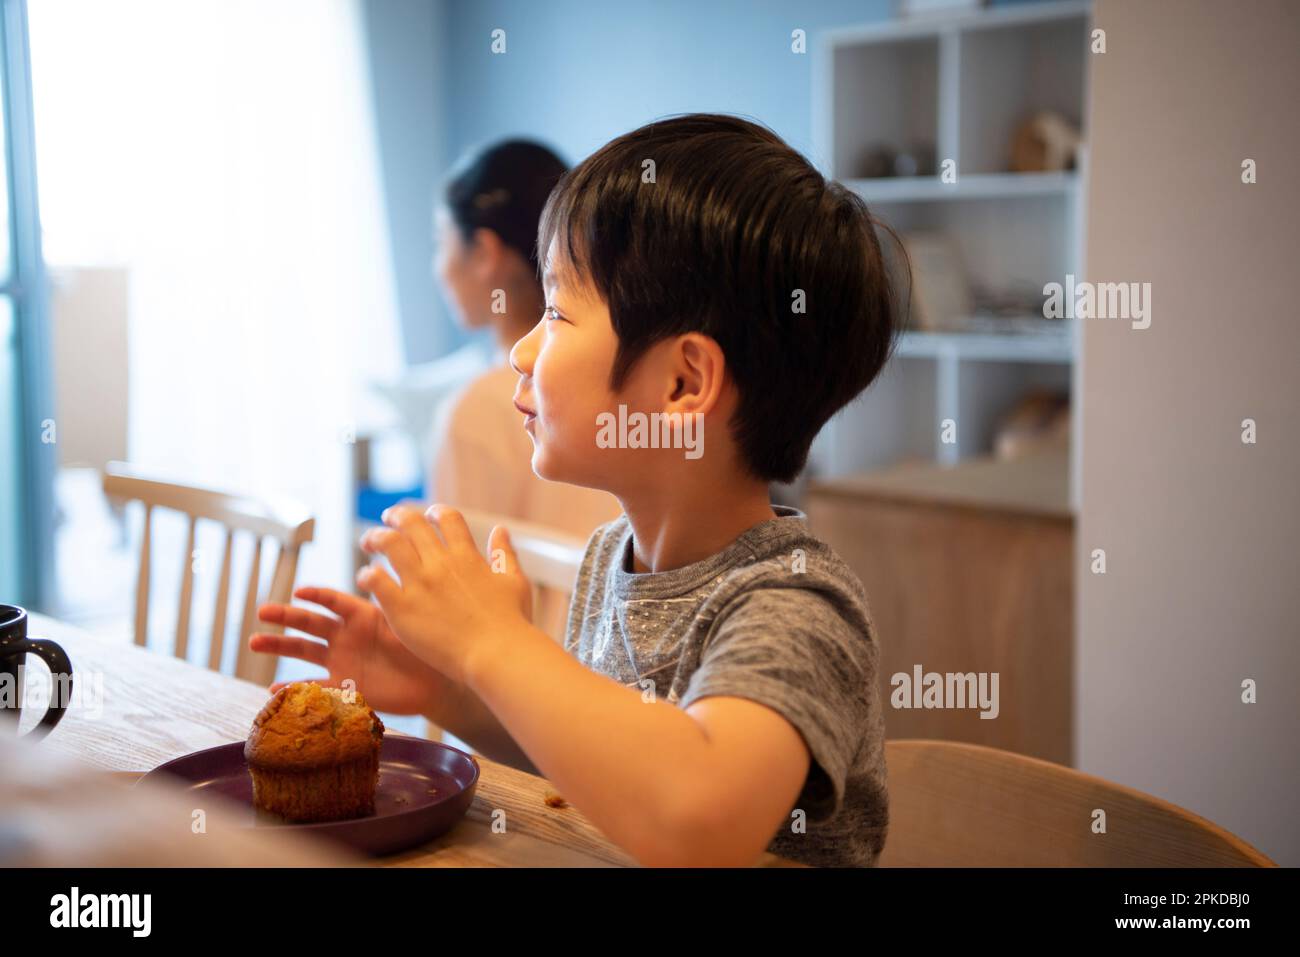 Boy eating bread Stock Photo